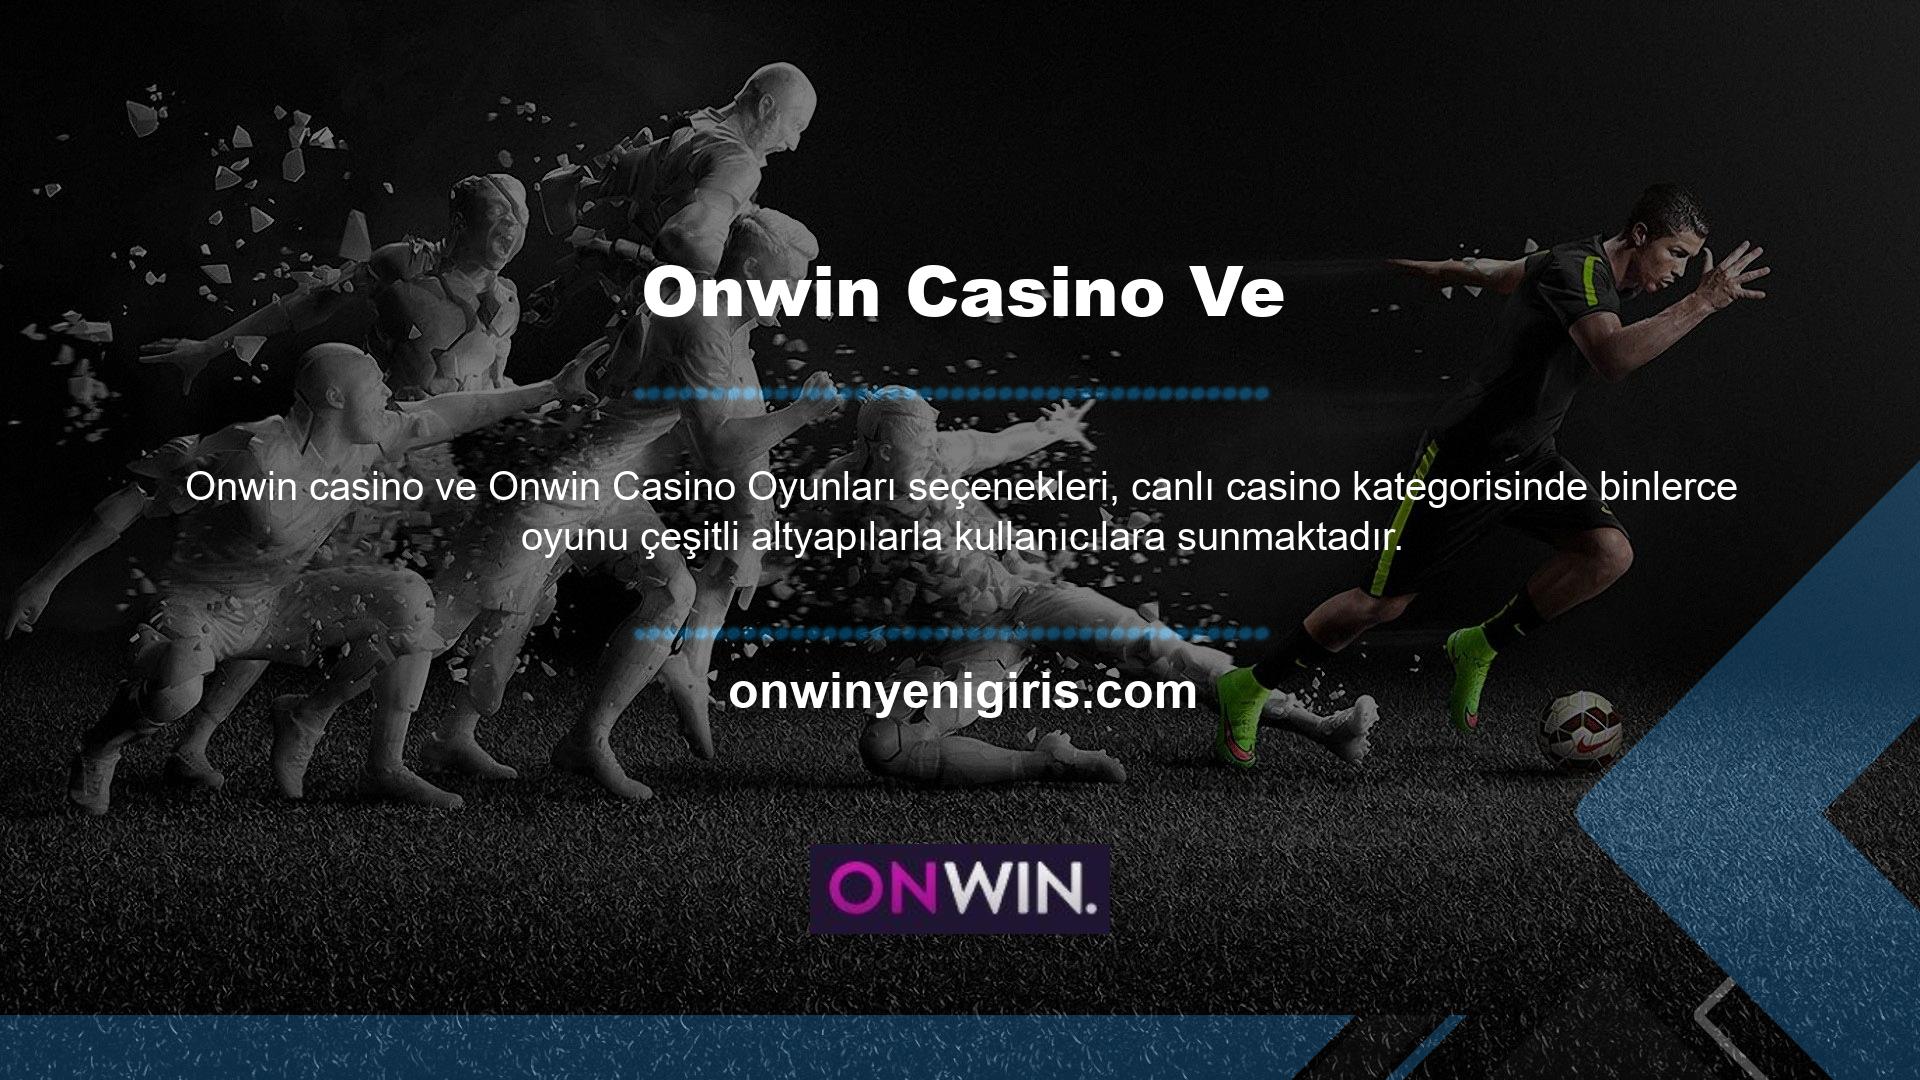 Onwin casino ve